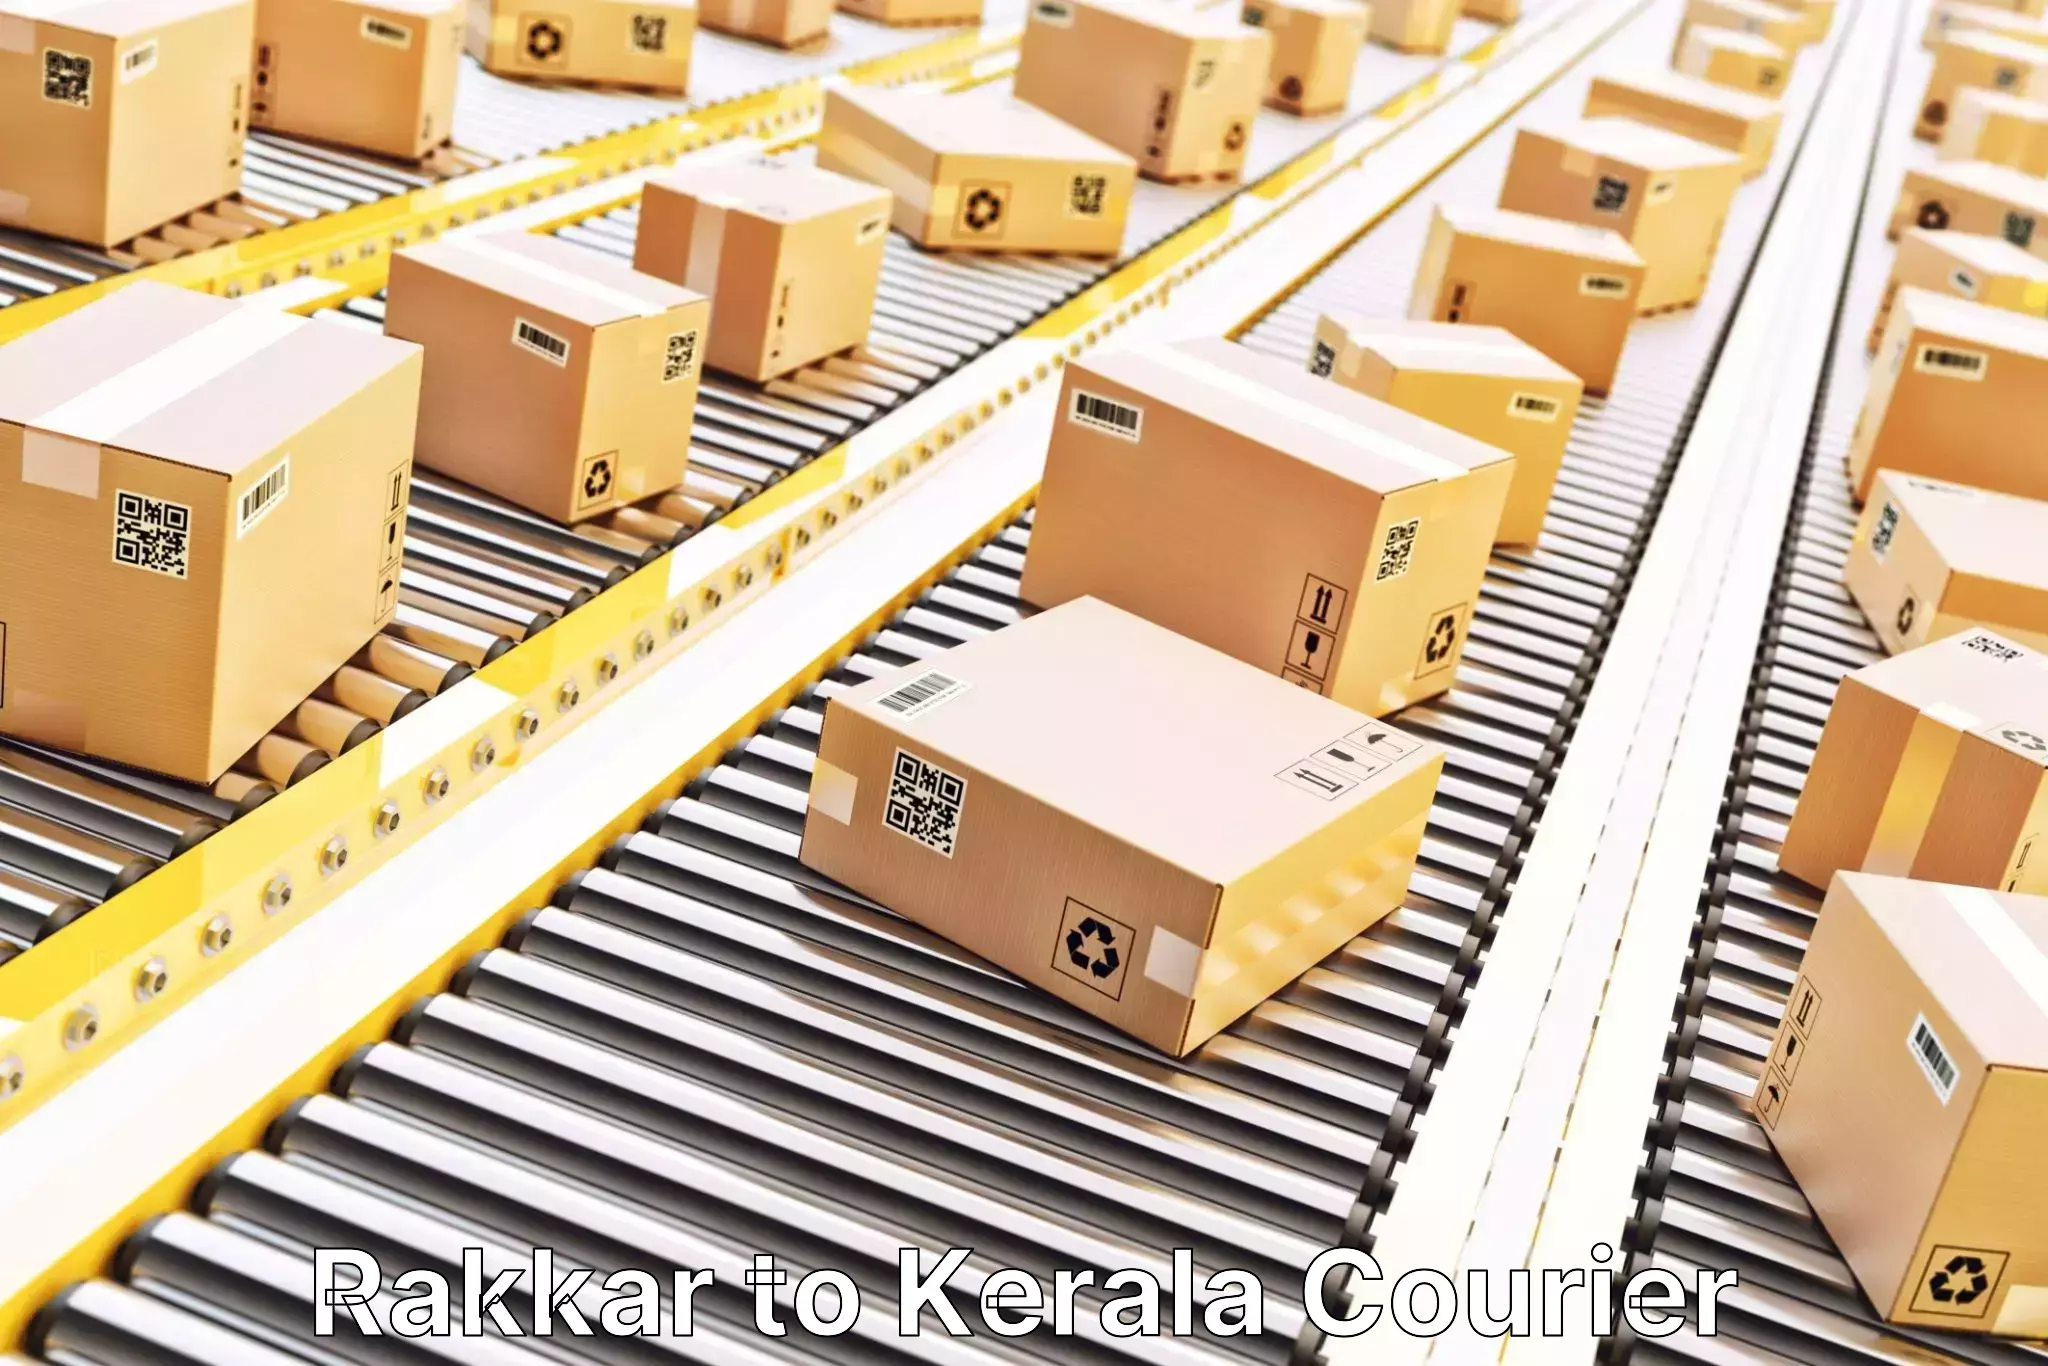 Reliable courier service Rakkar to Kazhakkoottam